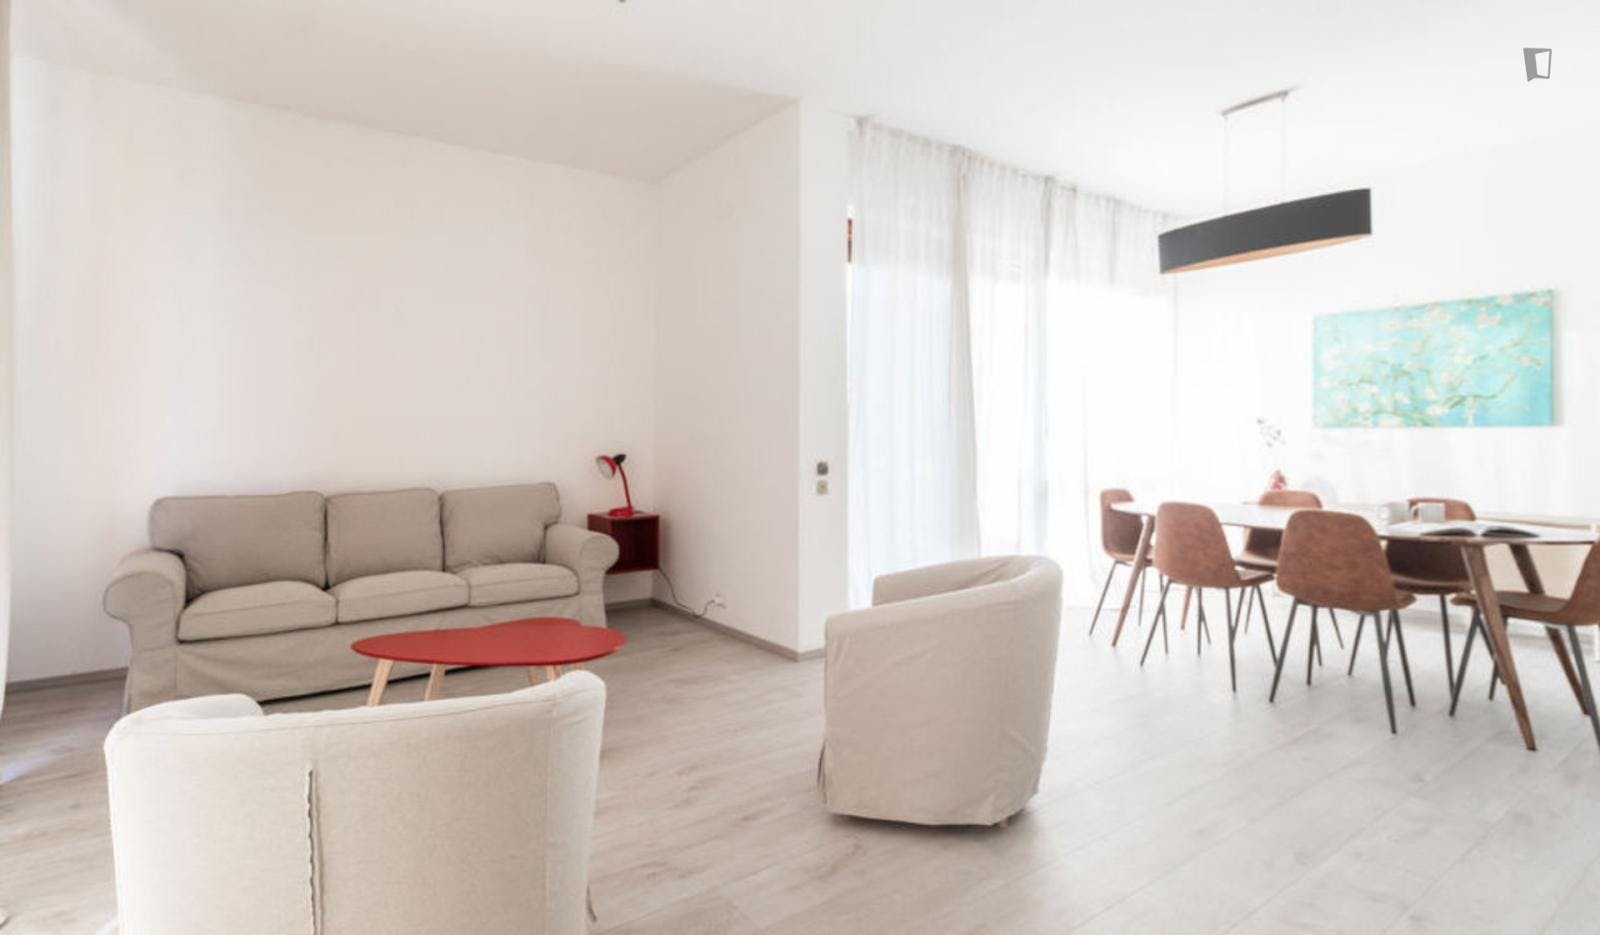 Modern 3-bedroom apartment in sunny Sanremo